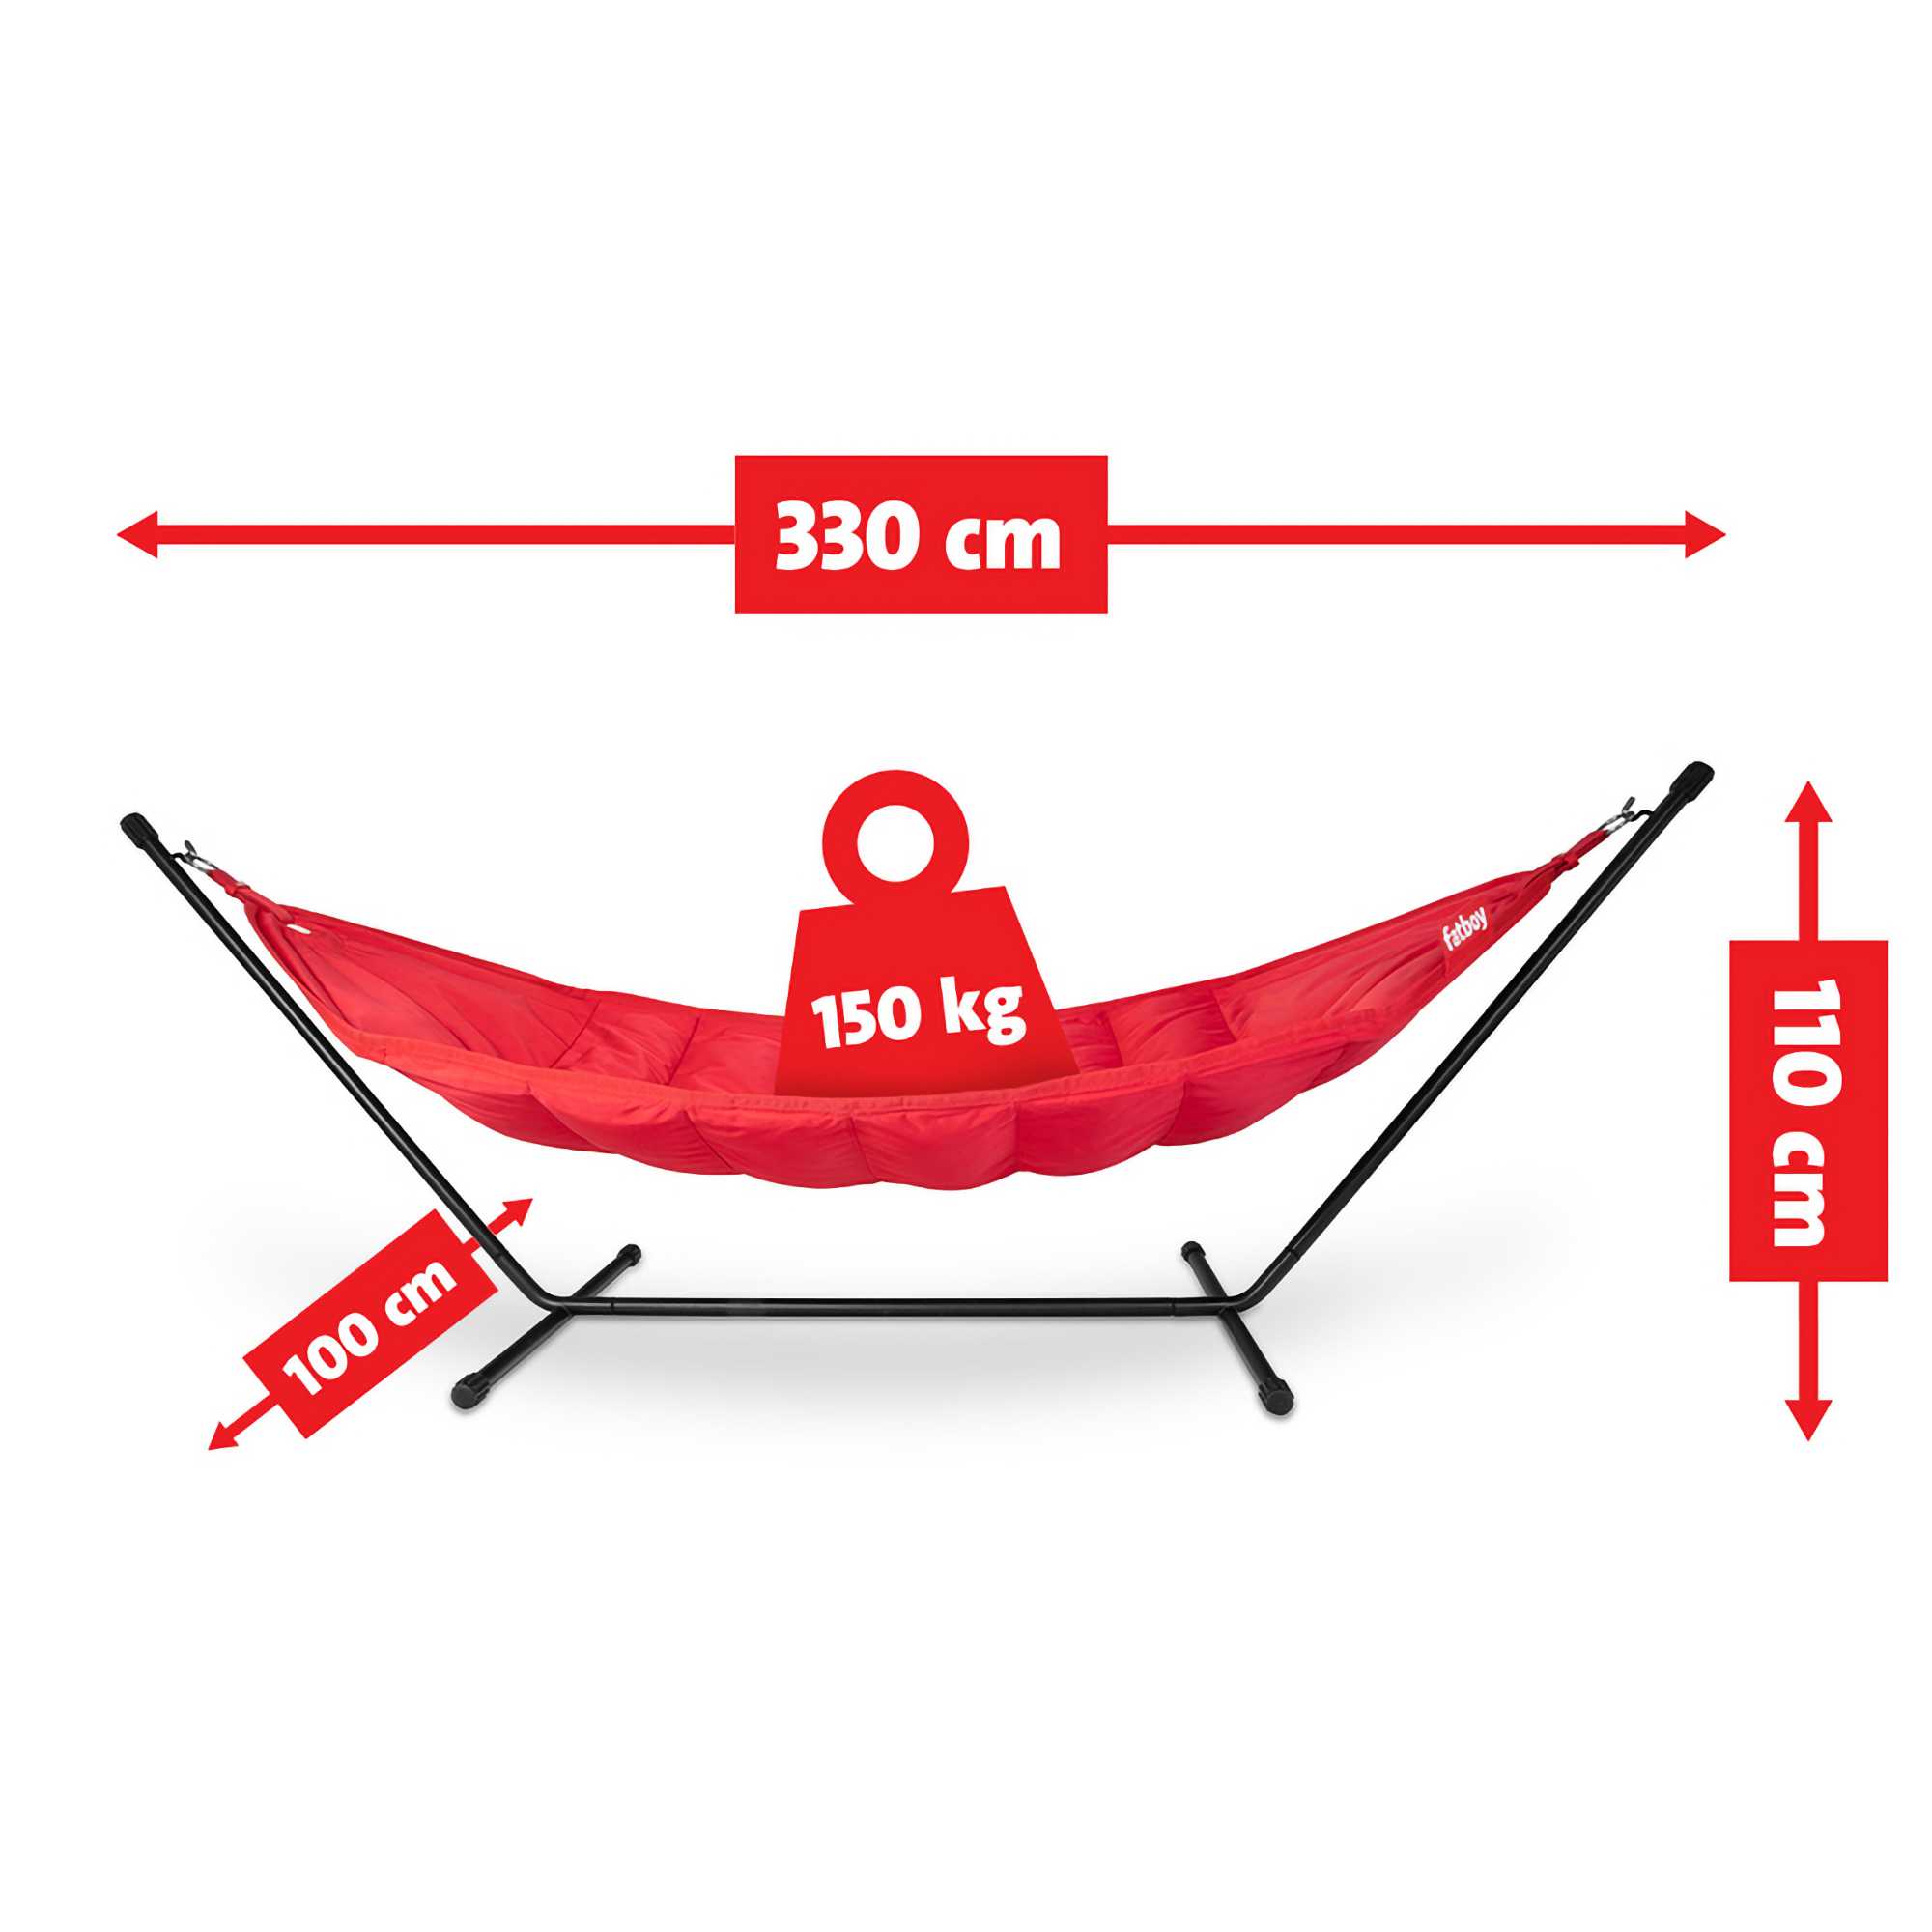 Headdemock: a foldable hammock with stand